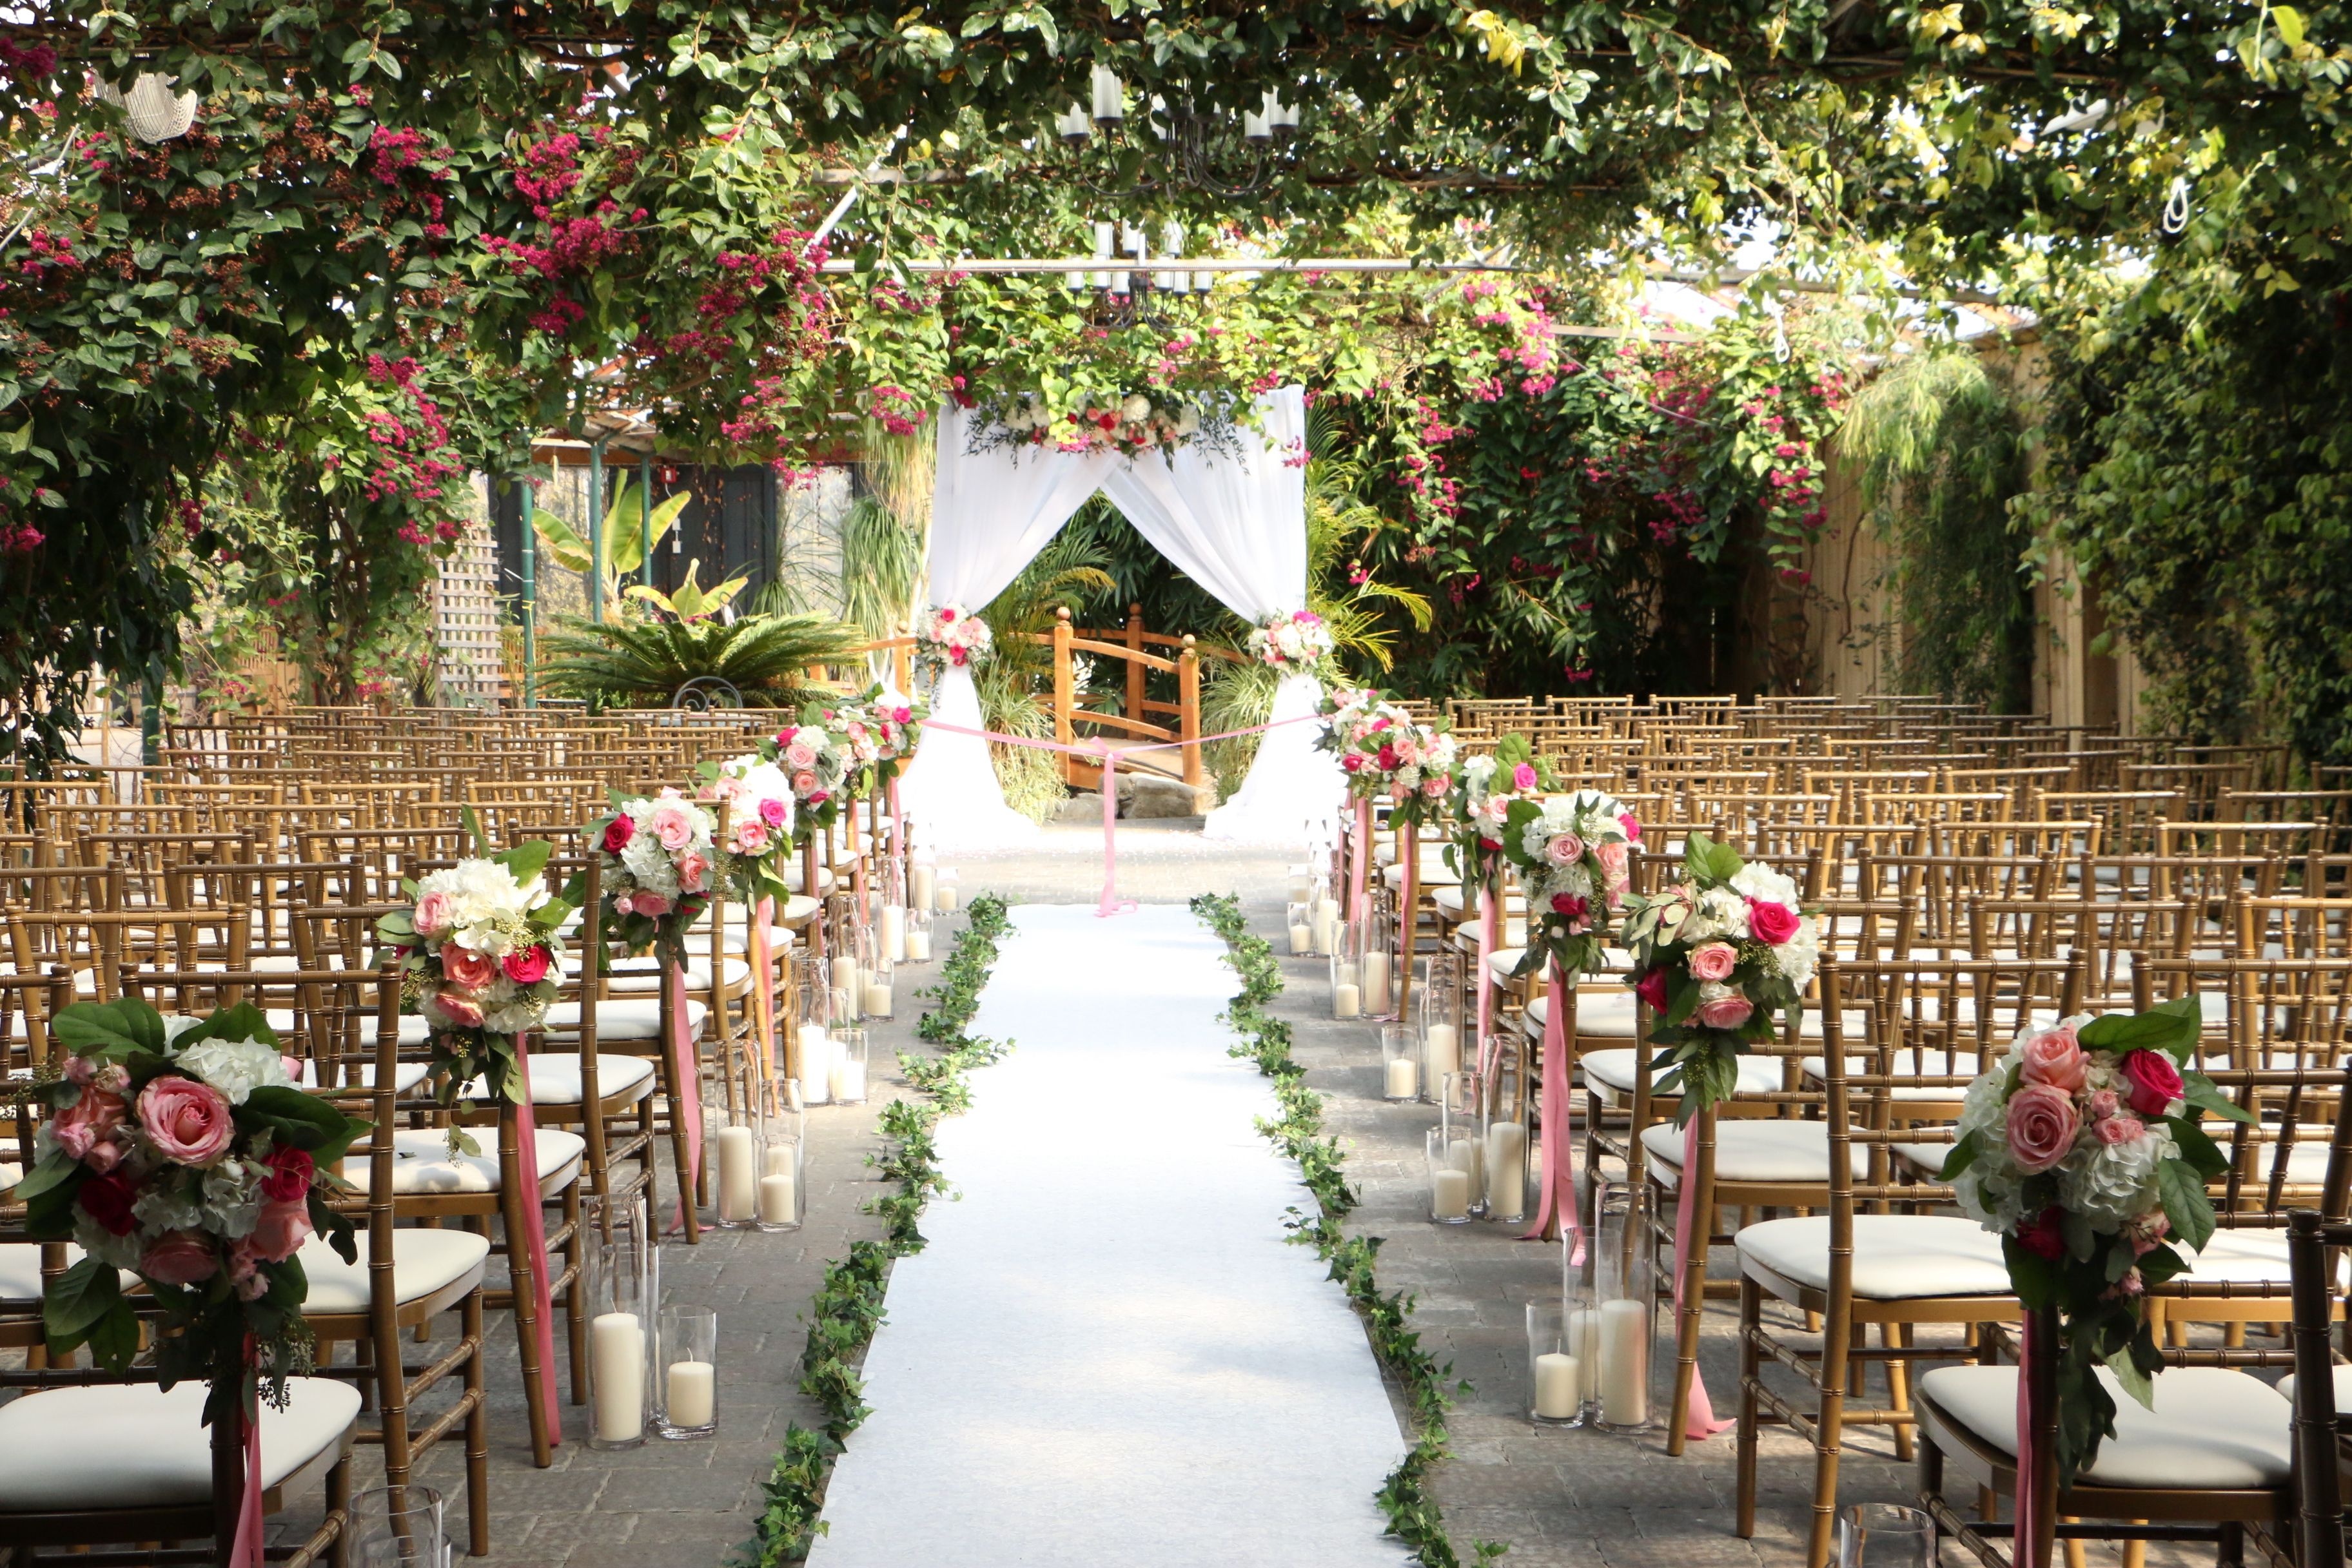 An outdoor wedding venue | Source: Shutterstock